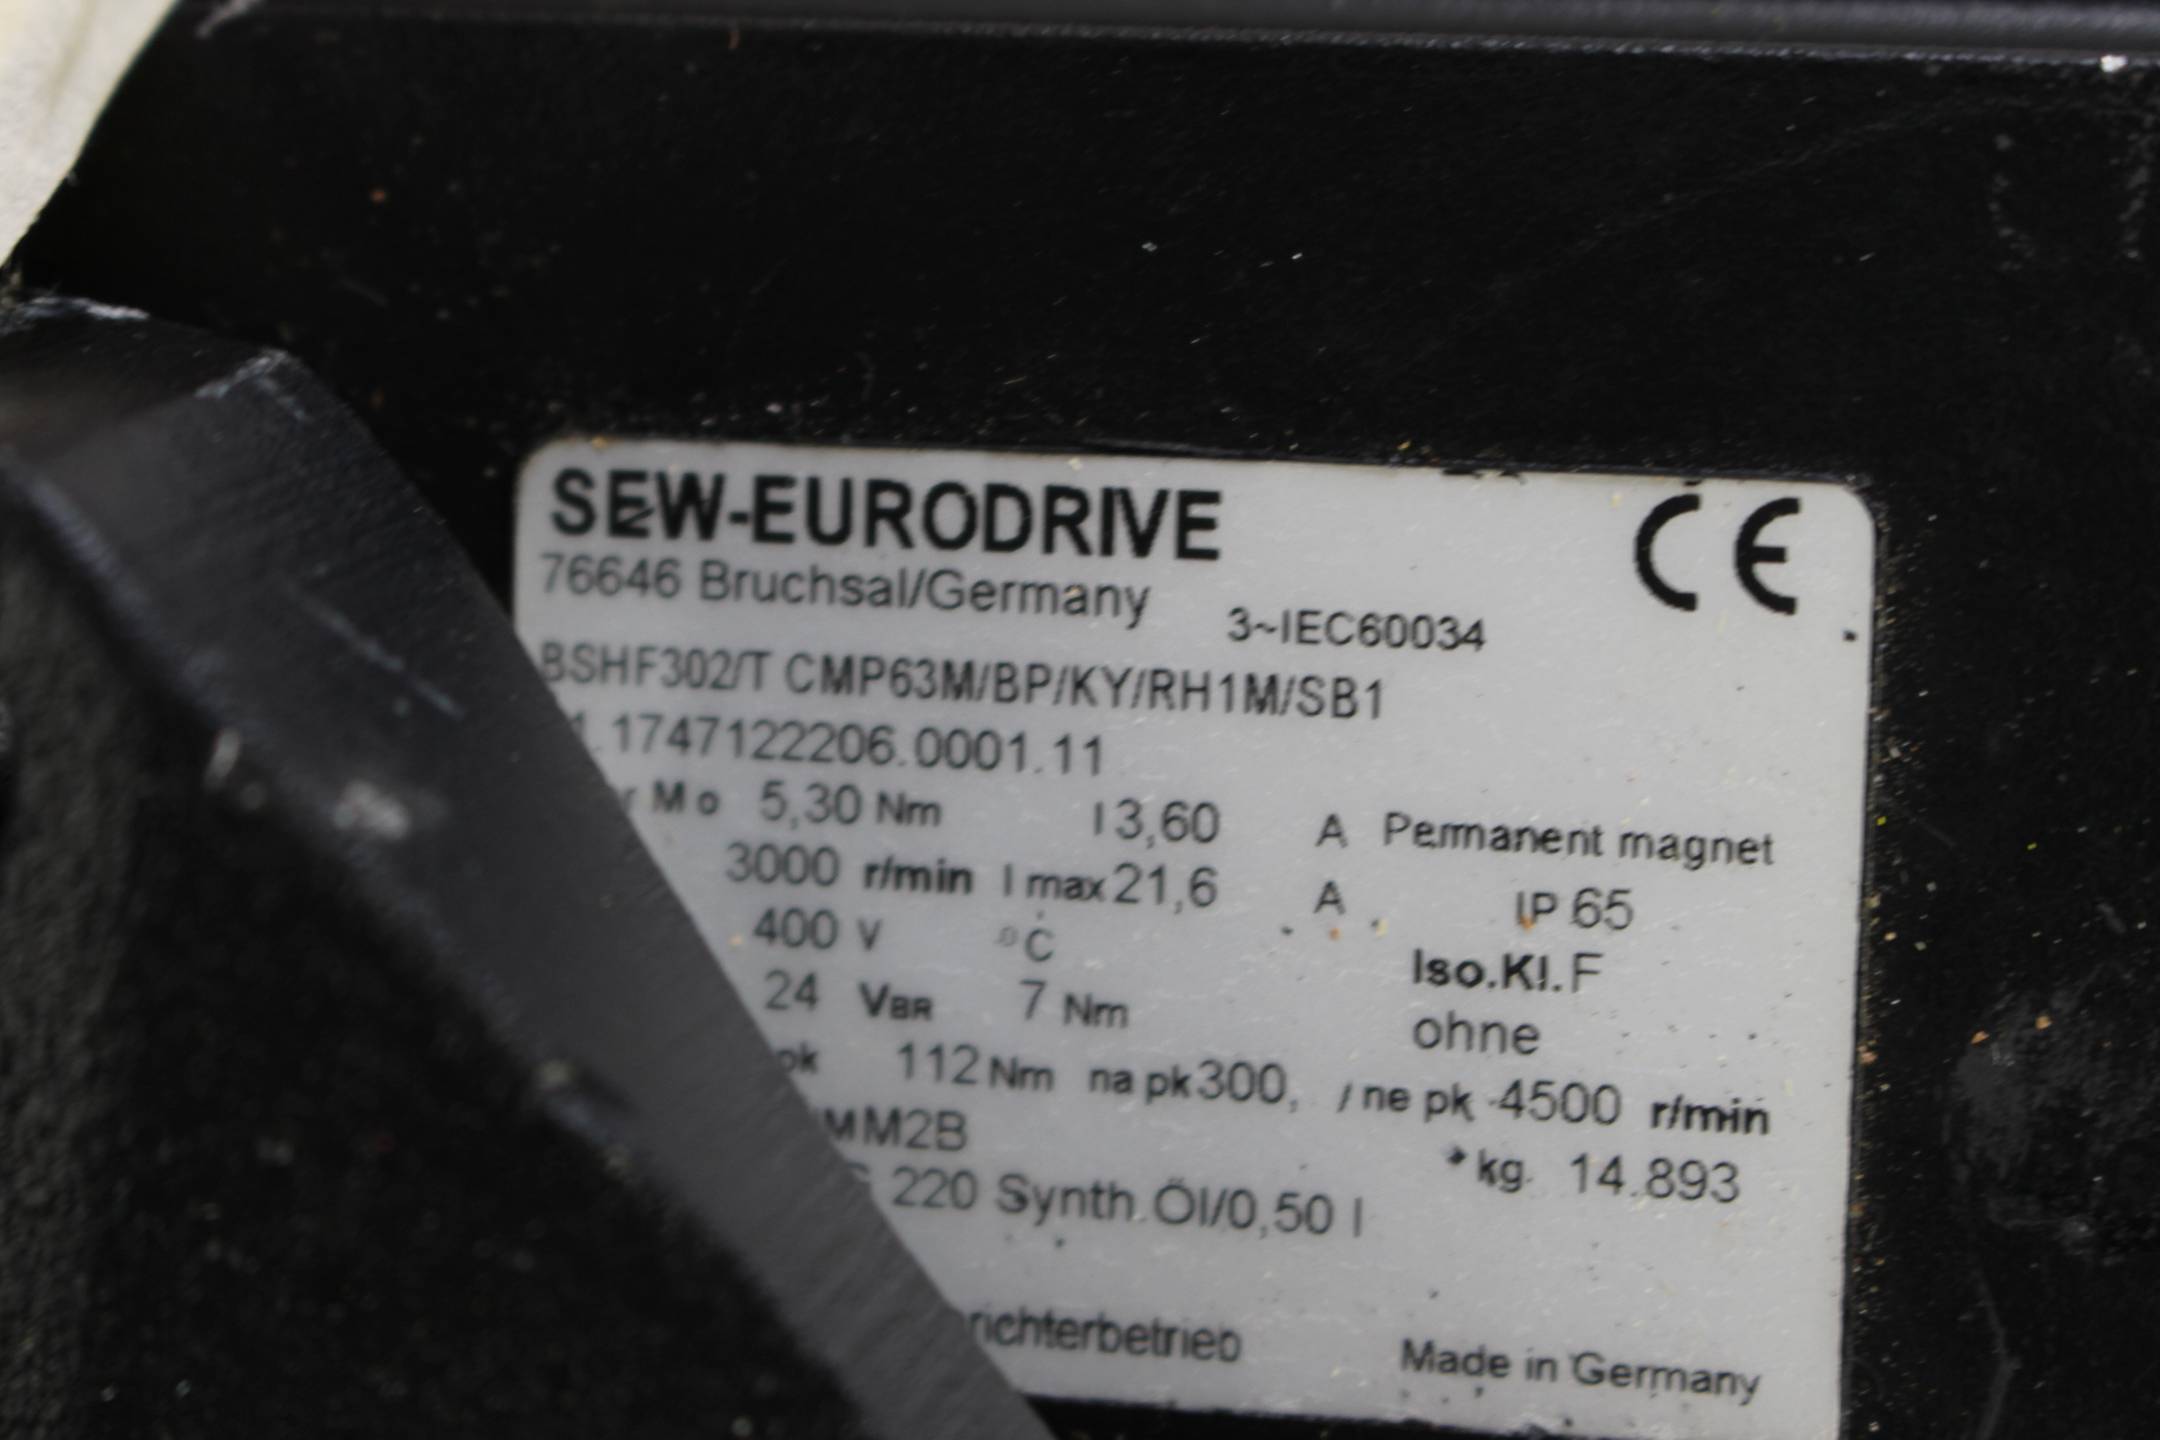 SEW-EURODRIVE BSHF302/T CMP63M/BP/KY/RH1M/SB1